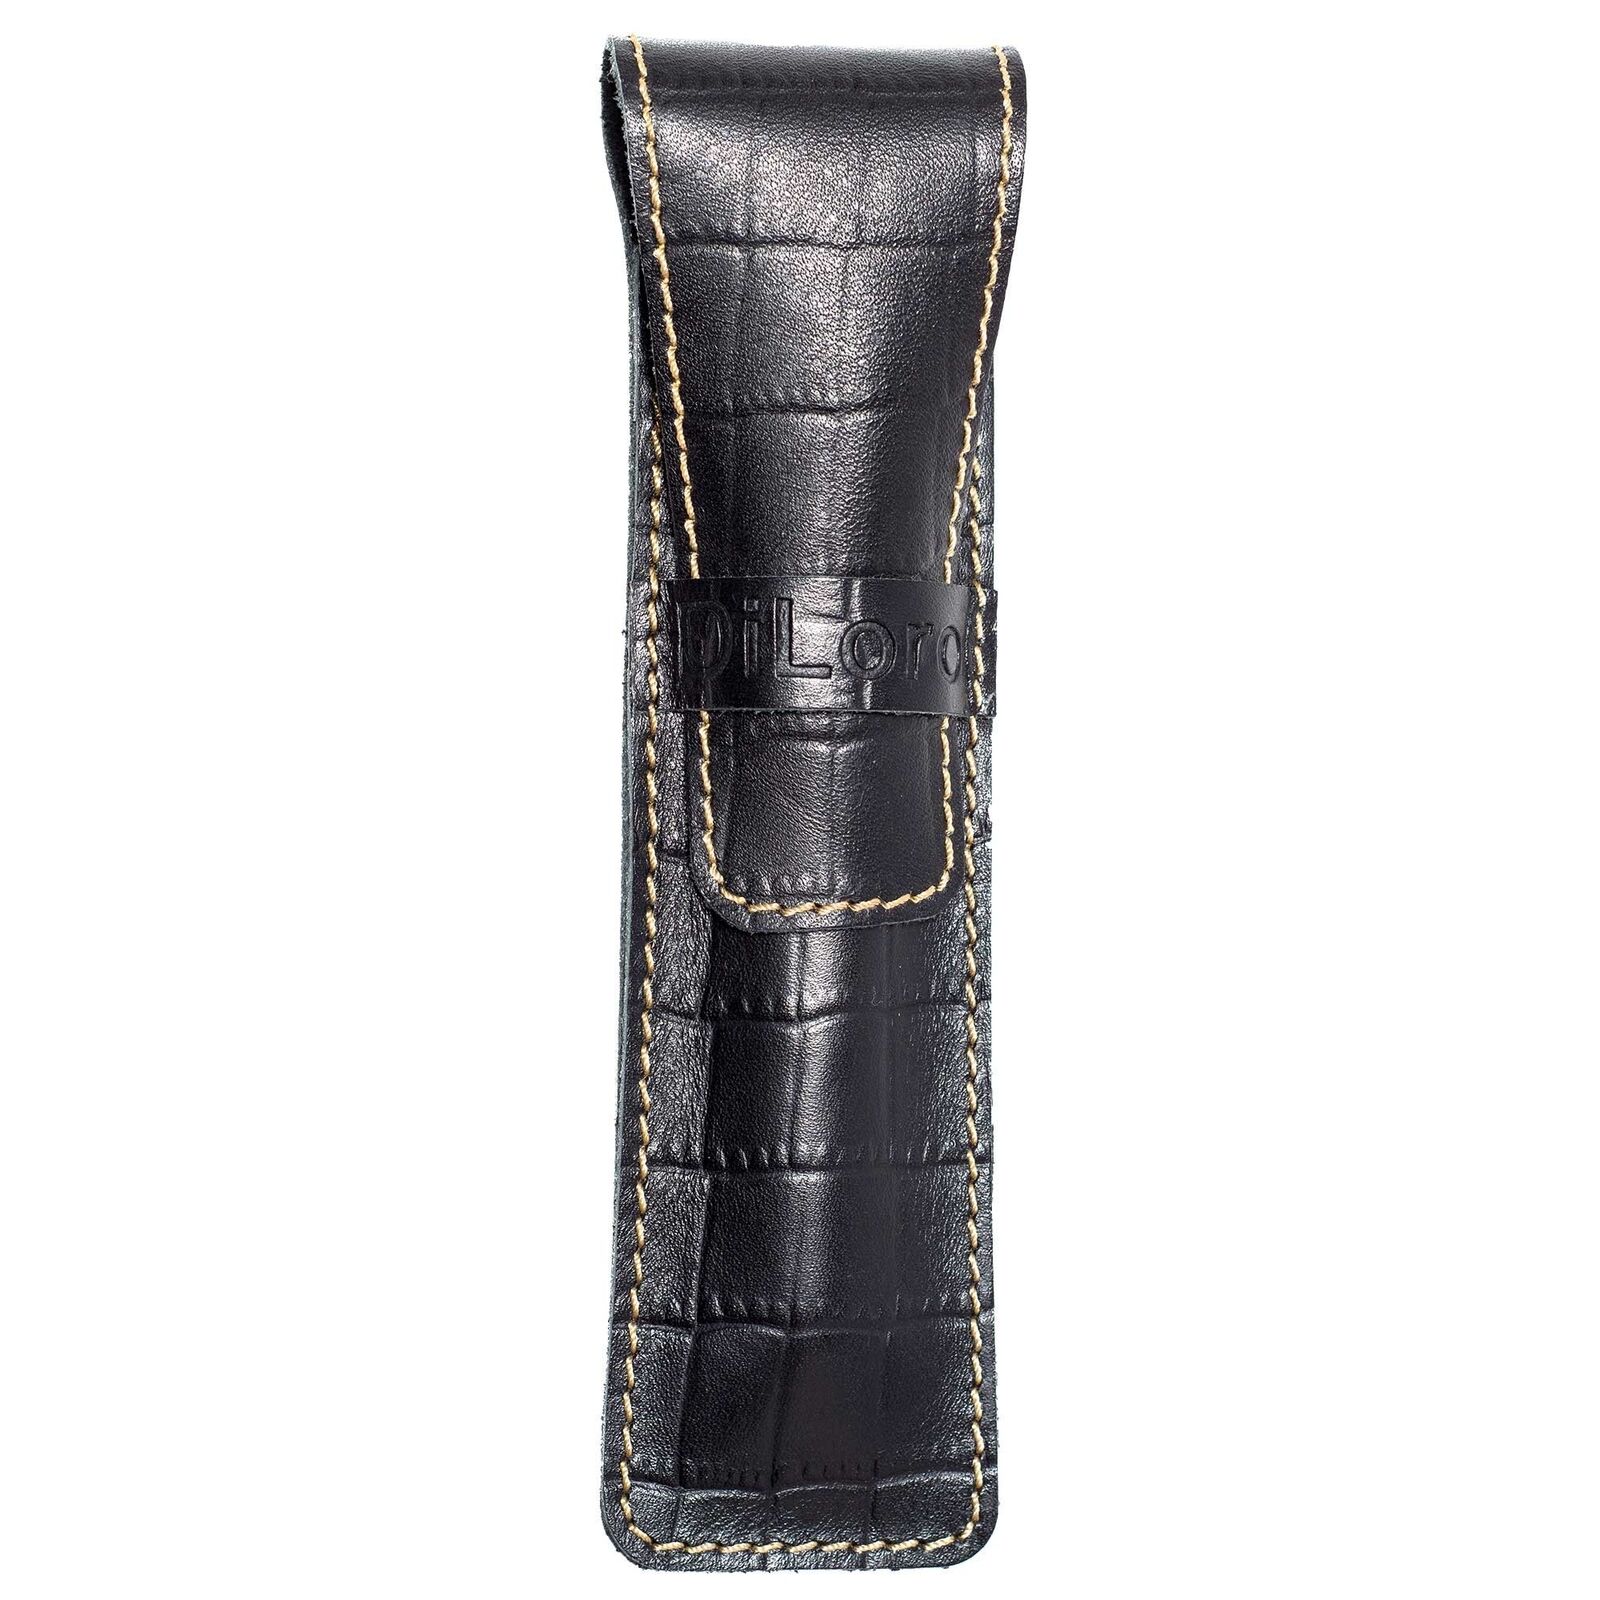 DiLoro Full Grain Top Quality Genuine Single Leather Pen Case Sleeve Holder